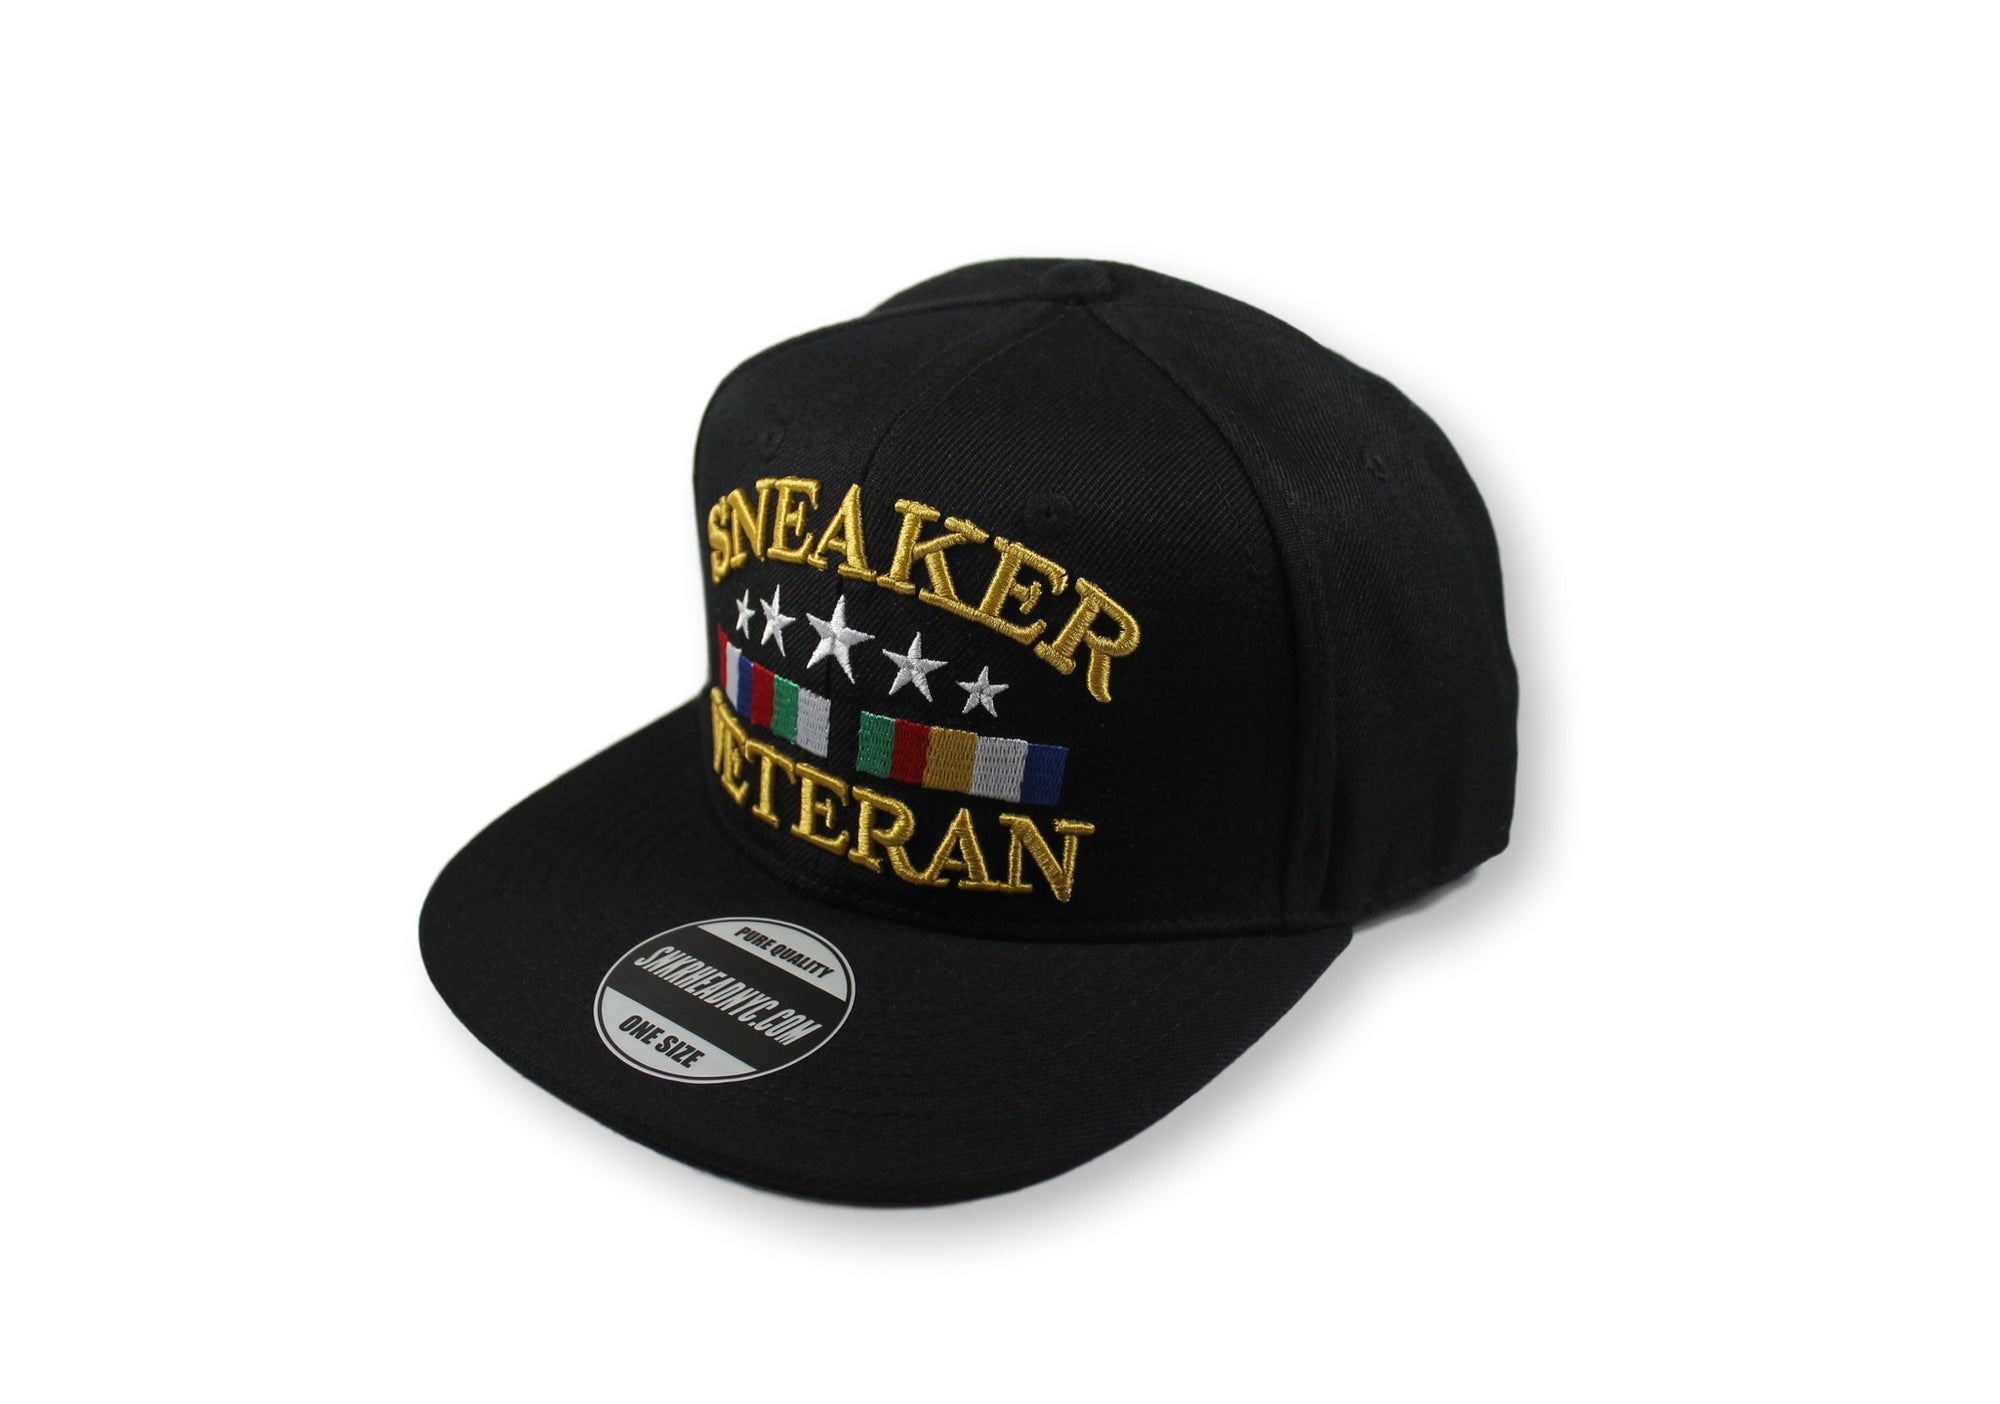 Sneaker Veteran Black Snapback Hat